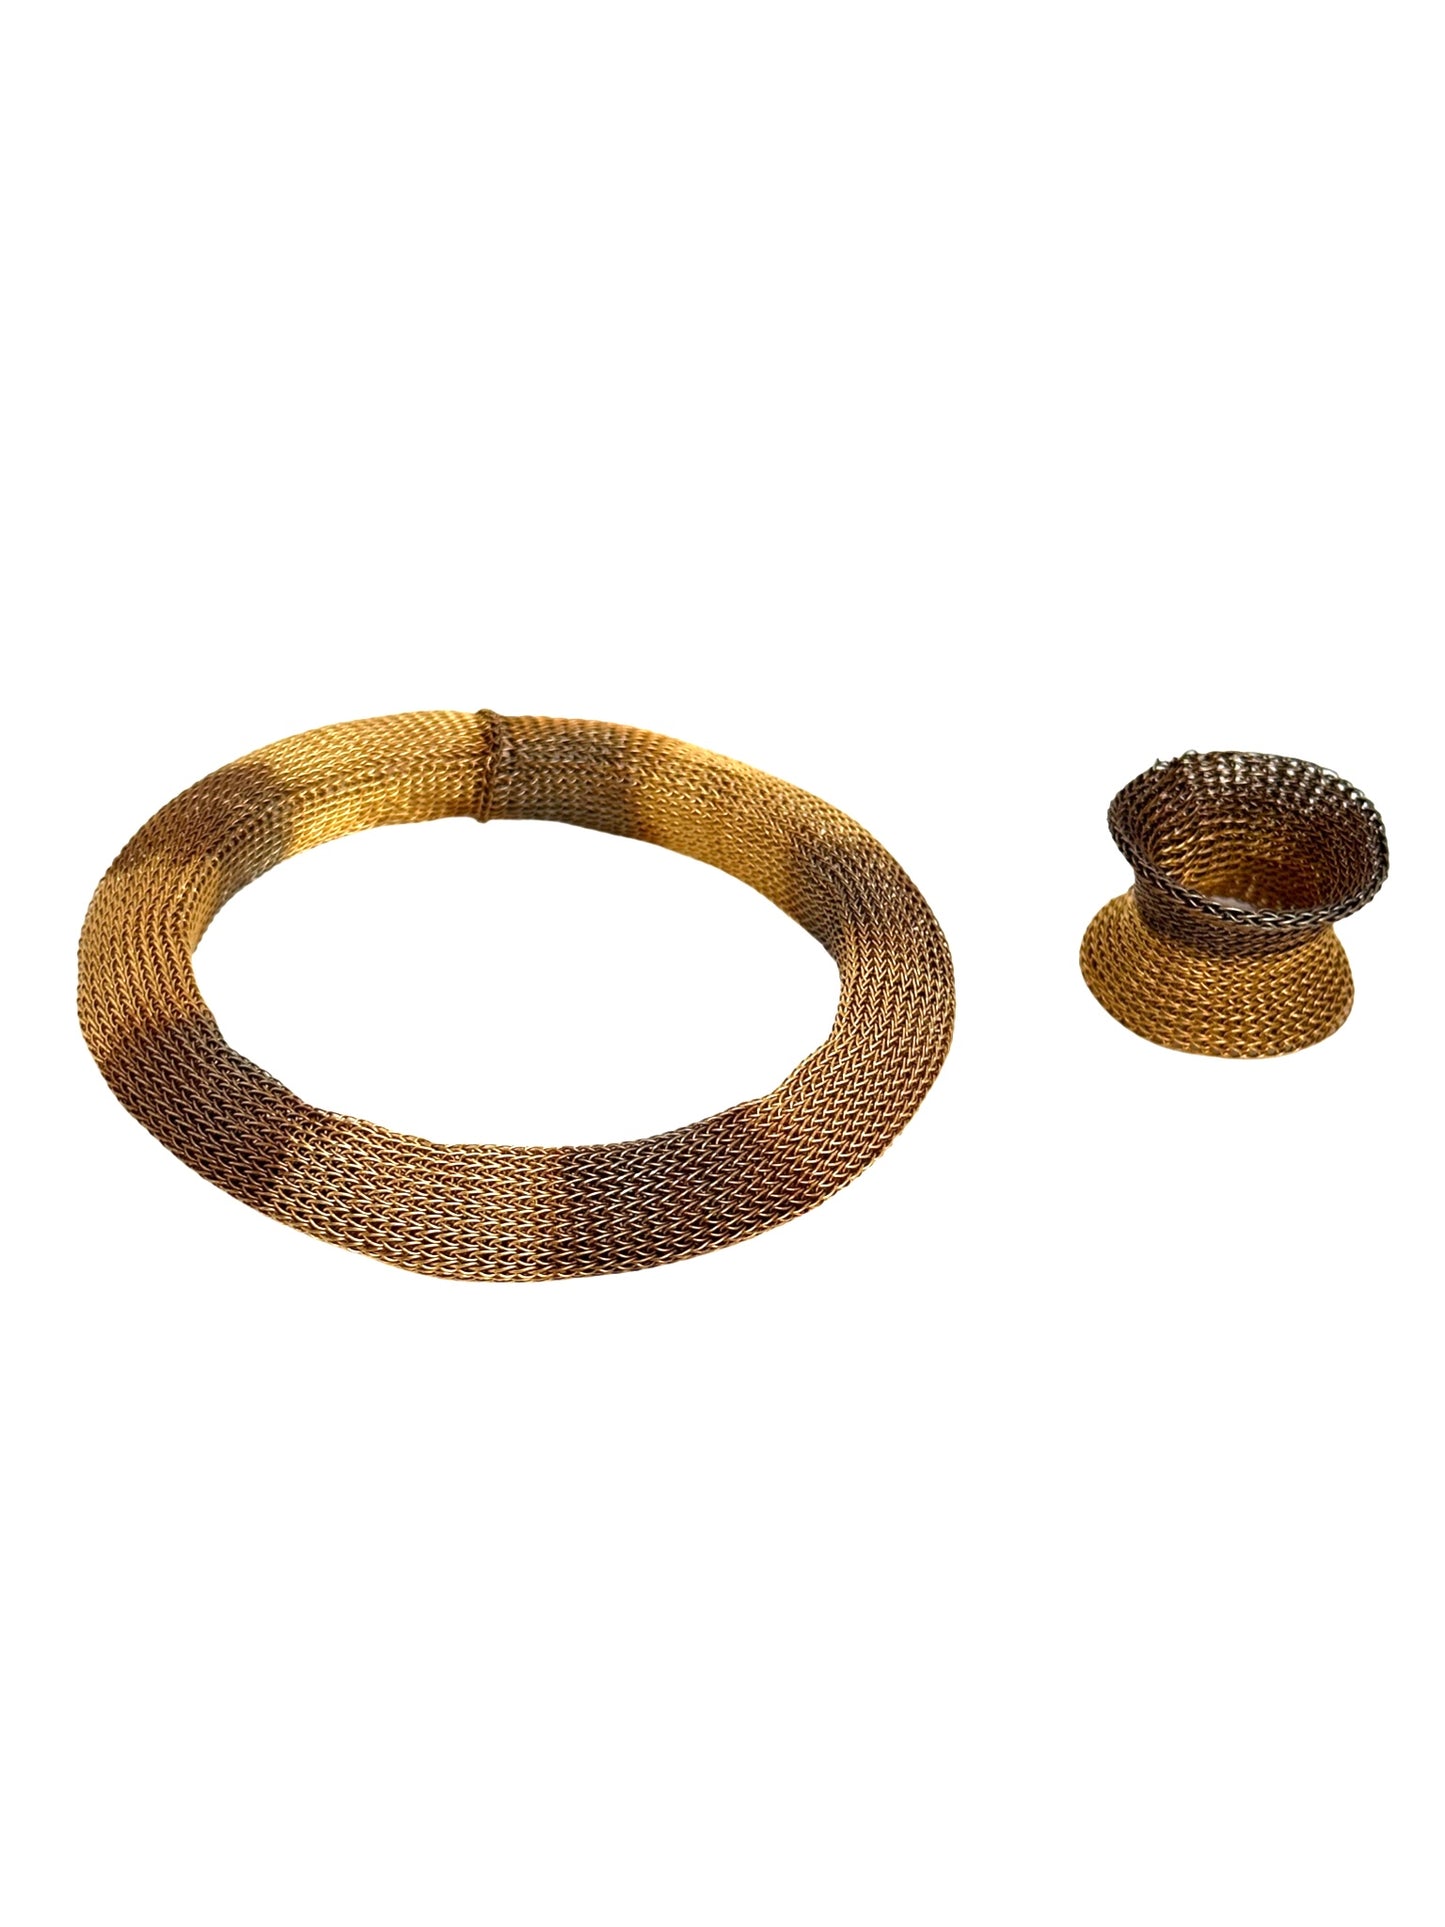 Milena Zu Oxidized Plated Gold Slinky Bangle